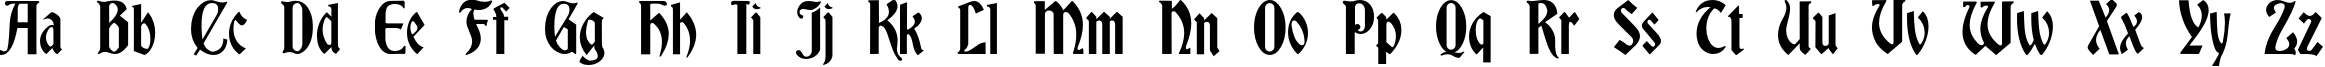 Пример написания английского алфавита шрифтом Romwall